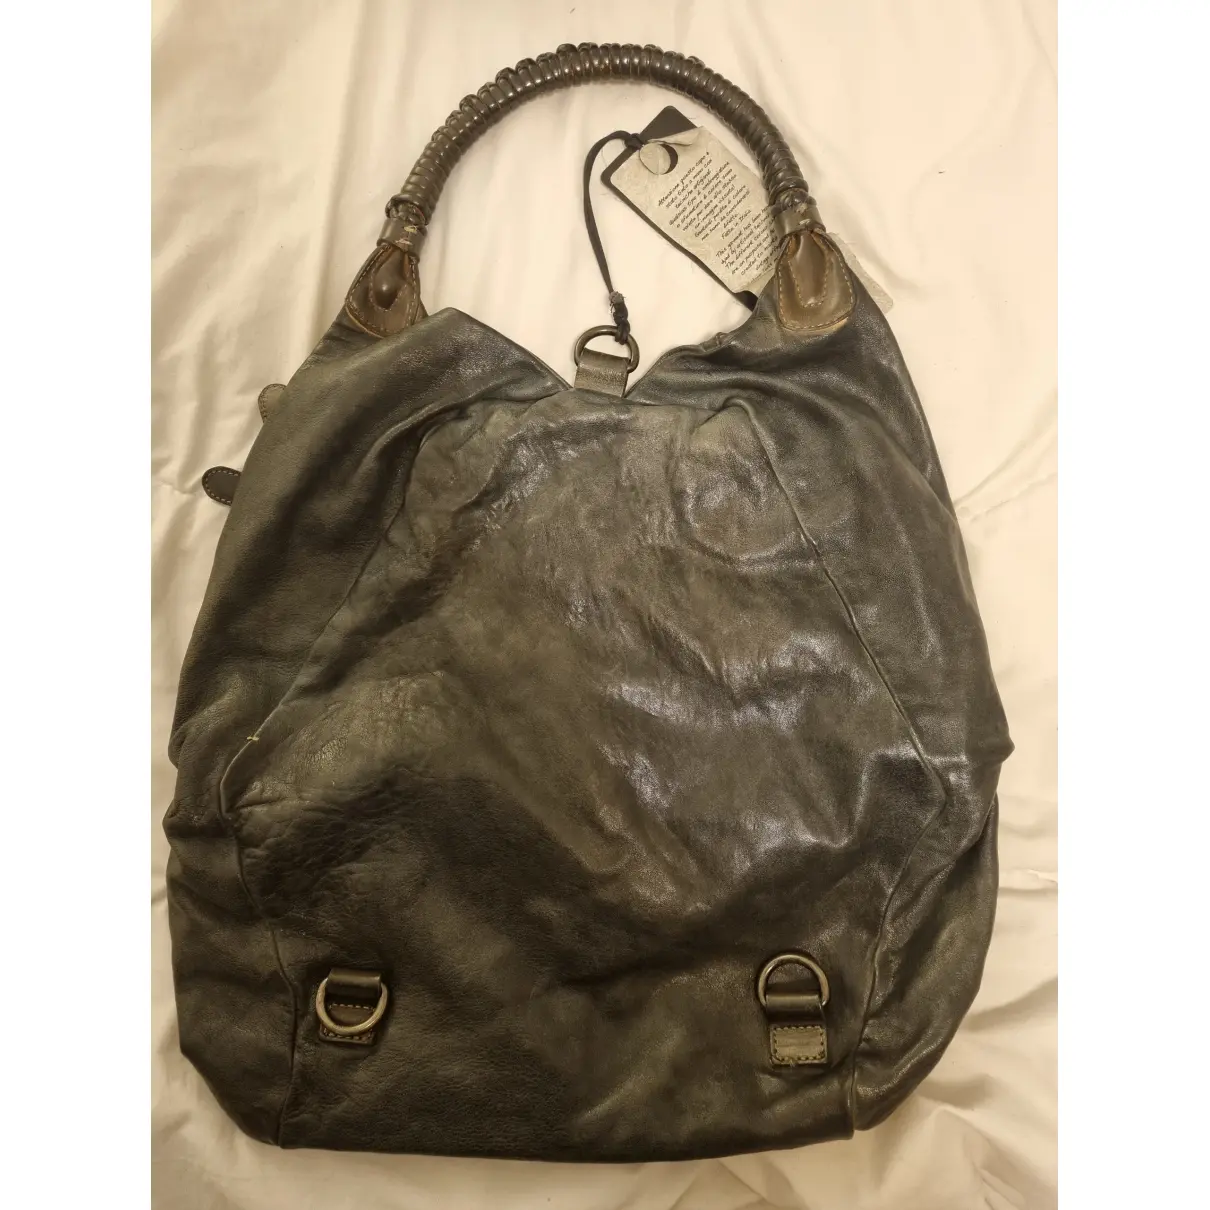 Buy GIORGIO BRATO Leather handbag online